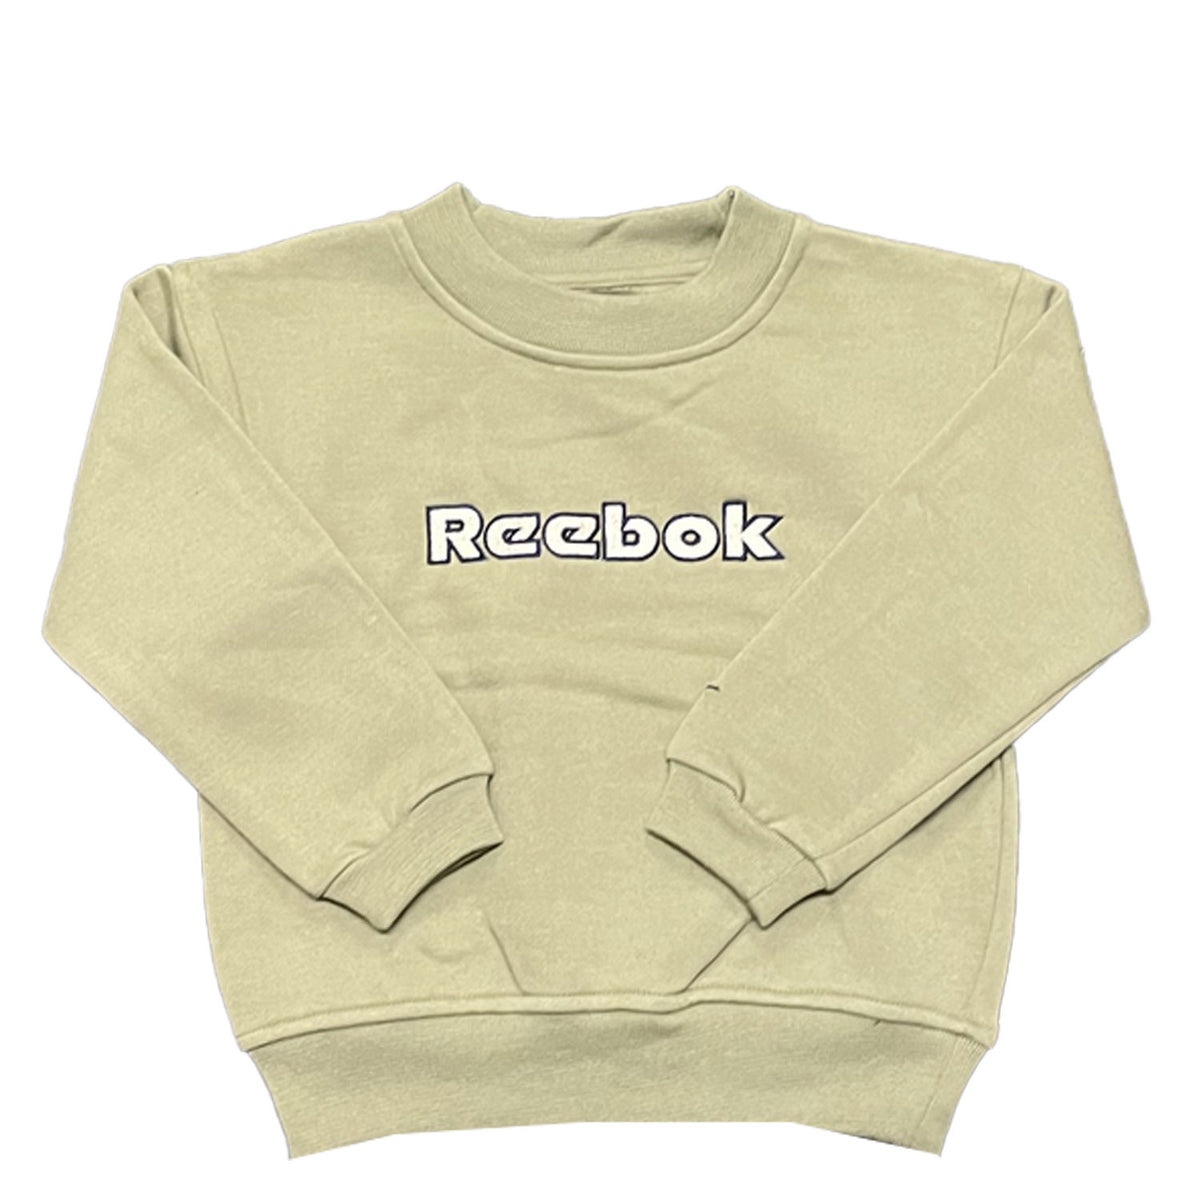 Reebok Infant Sports Academy Sweatshirt 6